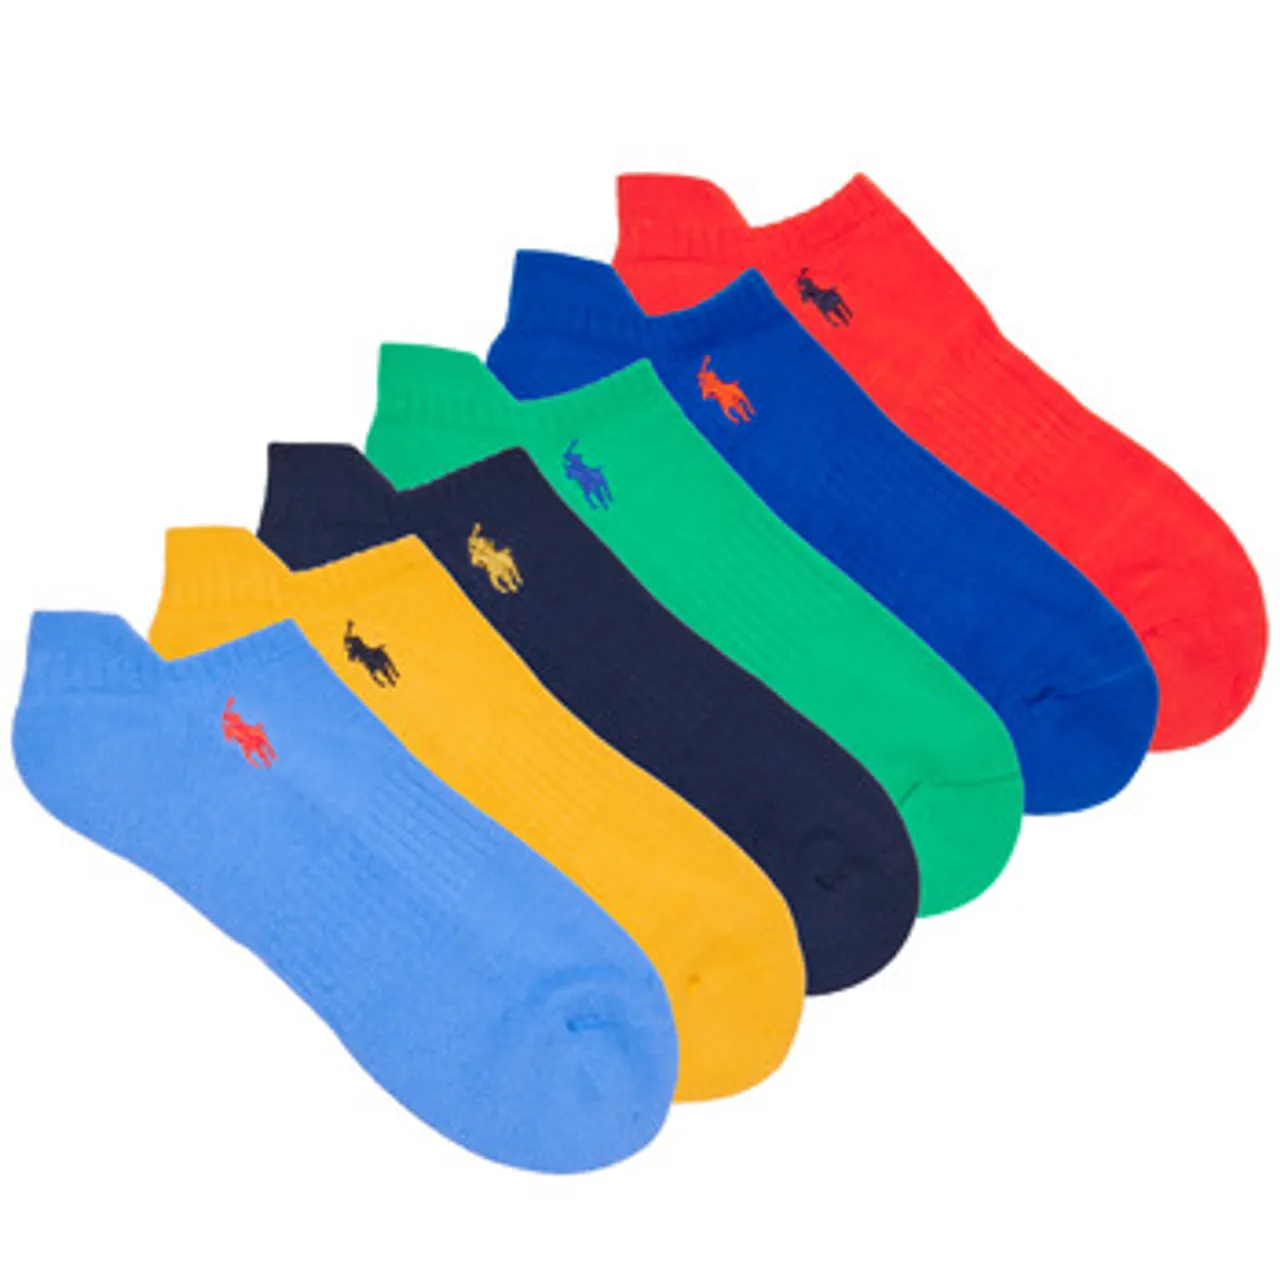 Polo Ralph Lauren  ASX117-SOLIDS-PED-6 PACK  women's Sports socks in Multicolour